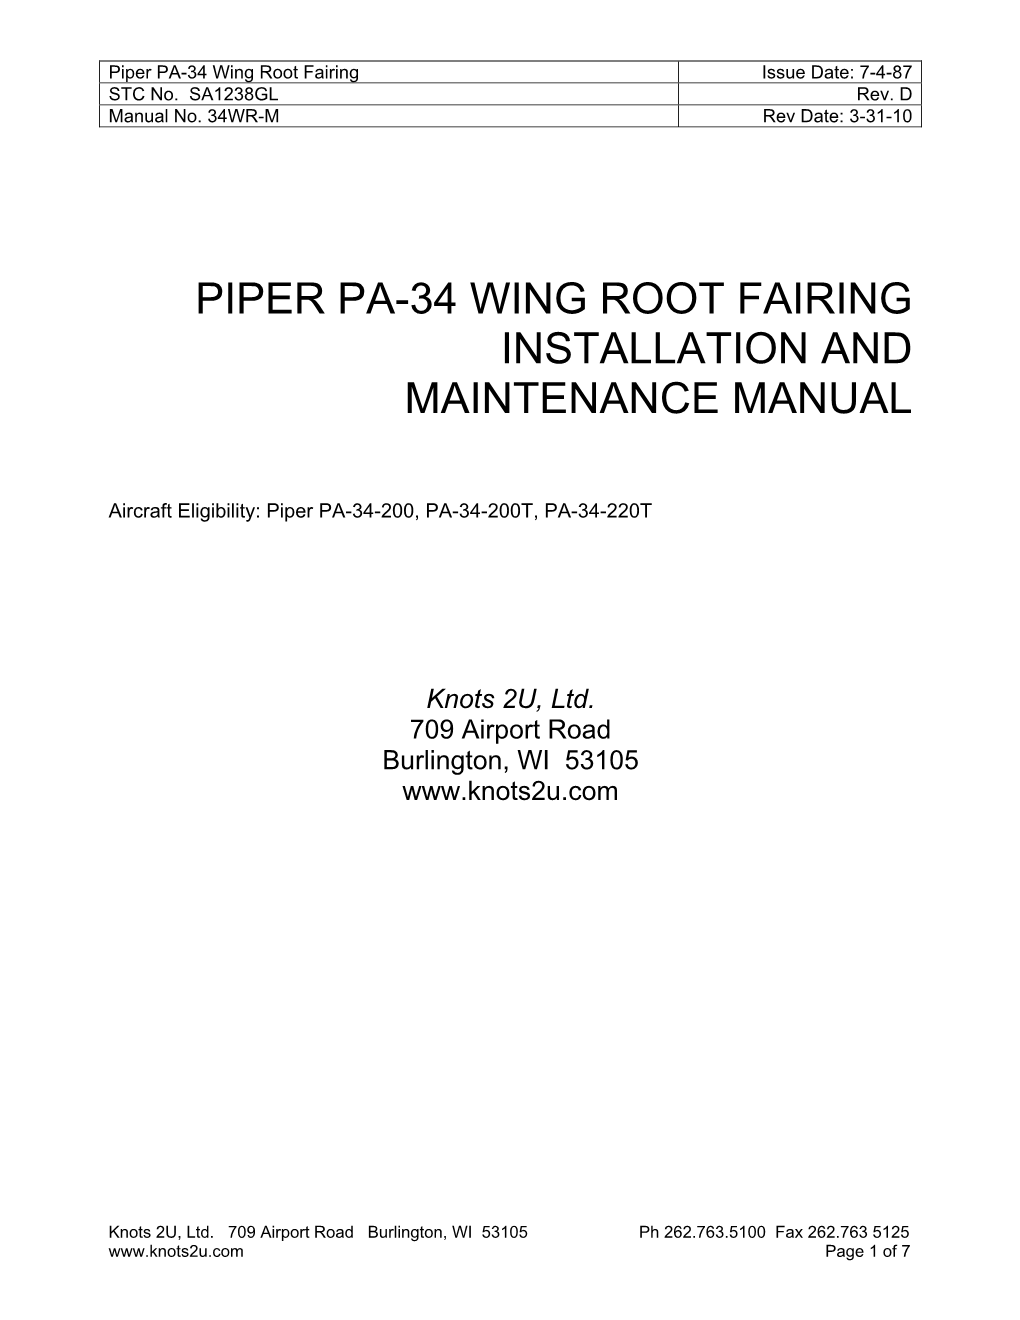 Piper Pa-34 Wing Root Fairing Installation and Maintenance Manual